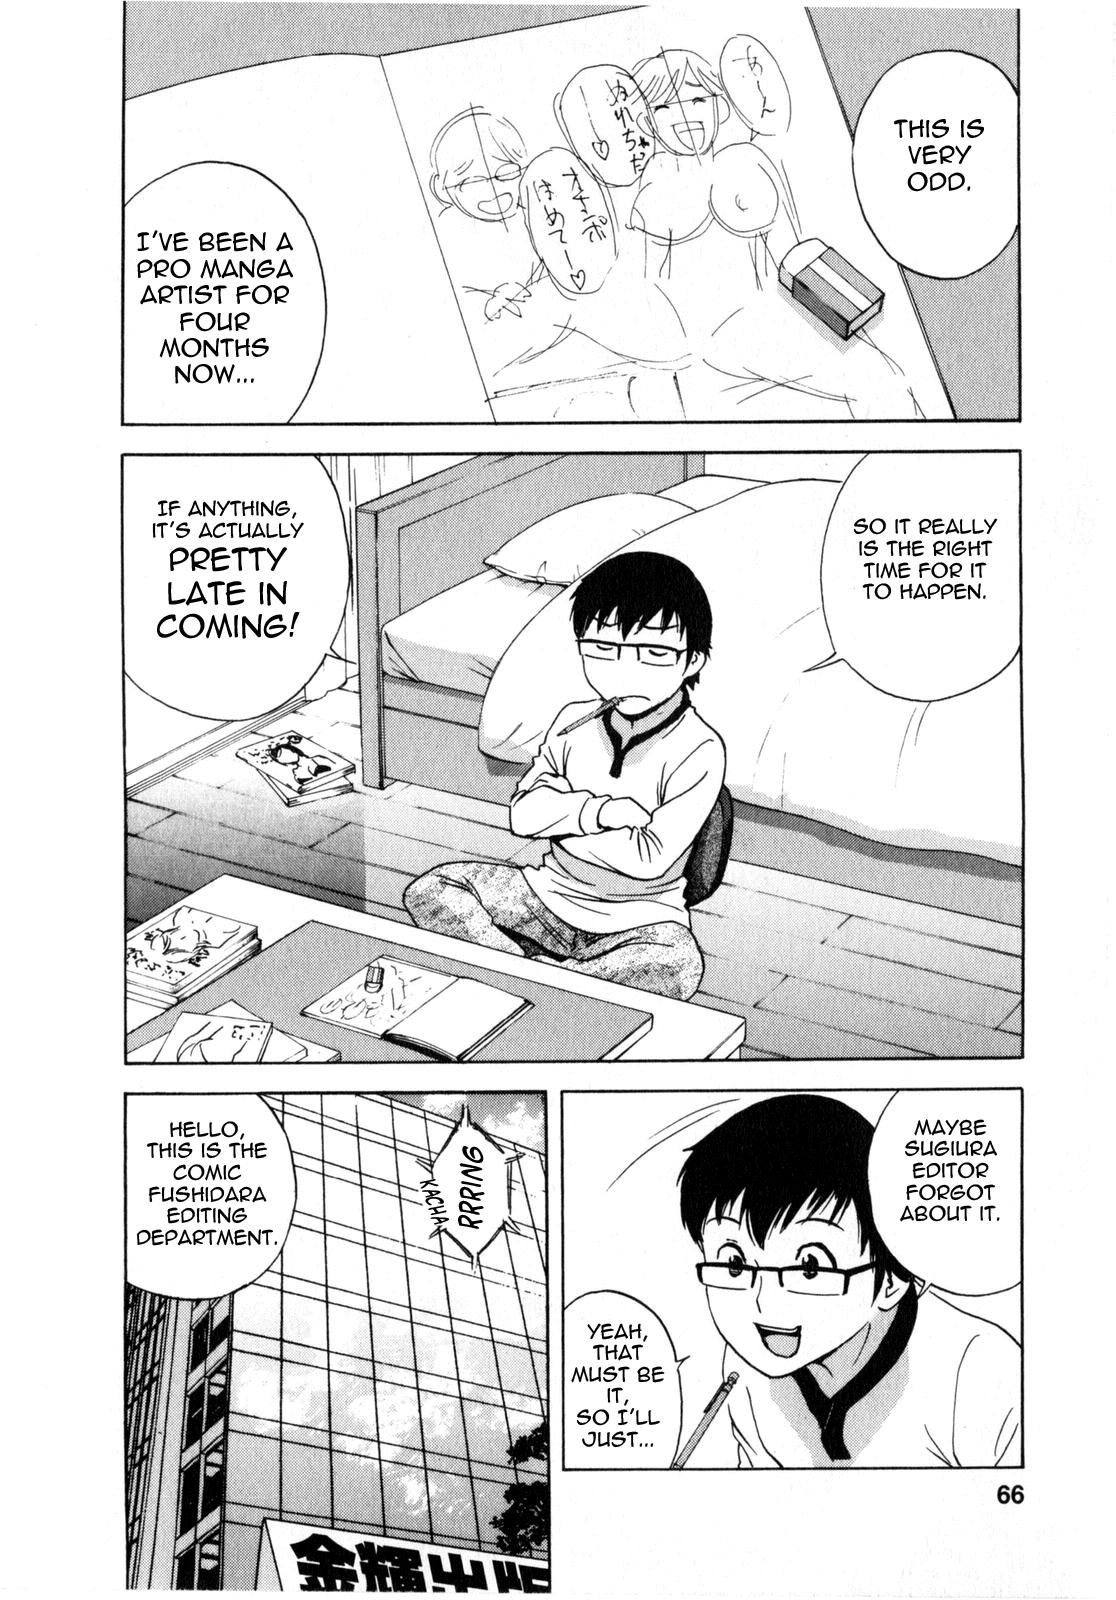 [Hidemaru] Life with Married Women Just Like a Manga 2 - Ch. 1-6 [English] {Tadanohito} 68